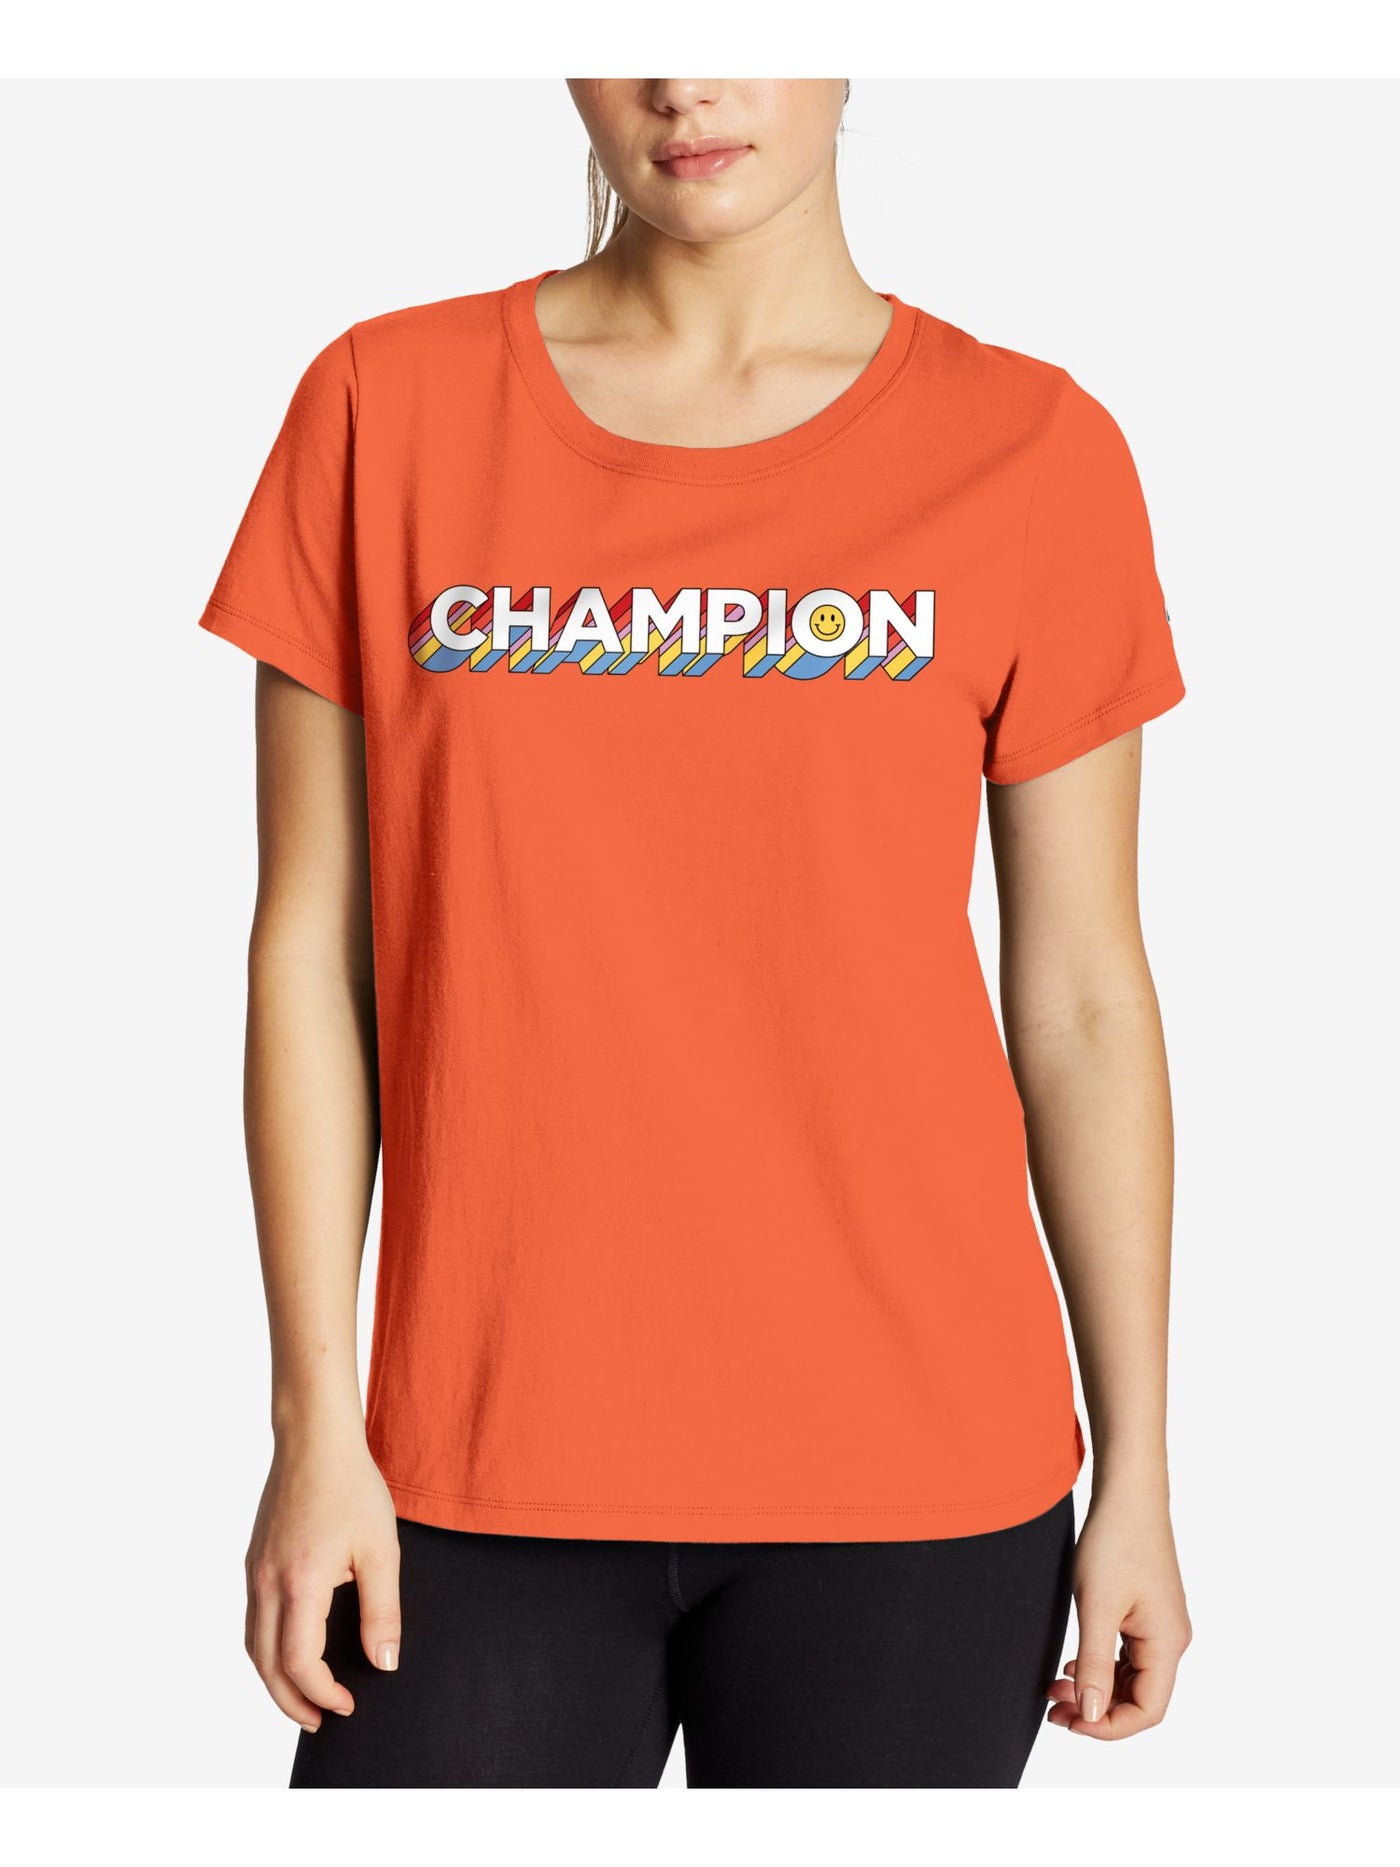 CHAMPION Womens Stretch Ribbed Short Sleeve Crew Neck T-Shirt